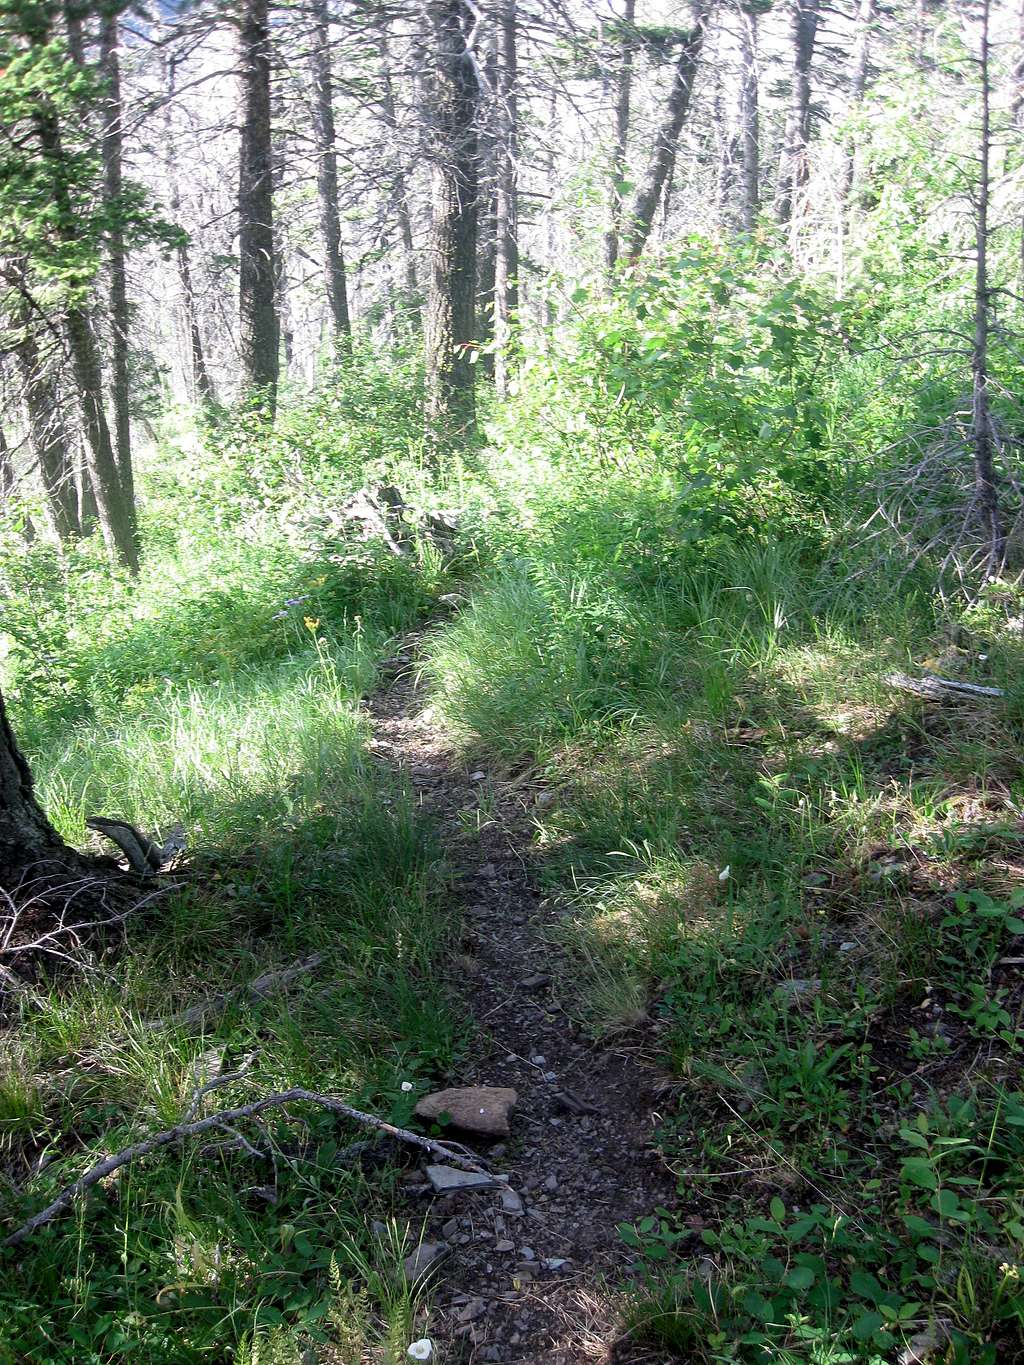 More Elk Trail